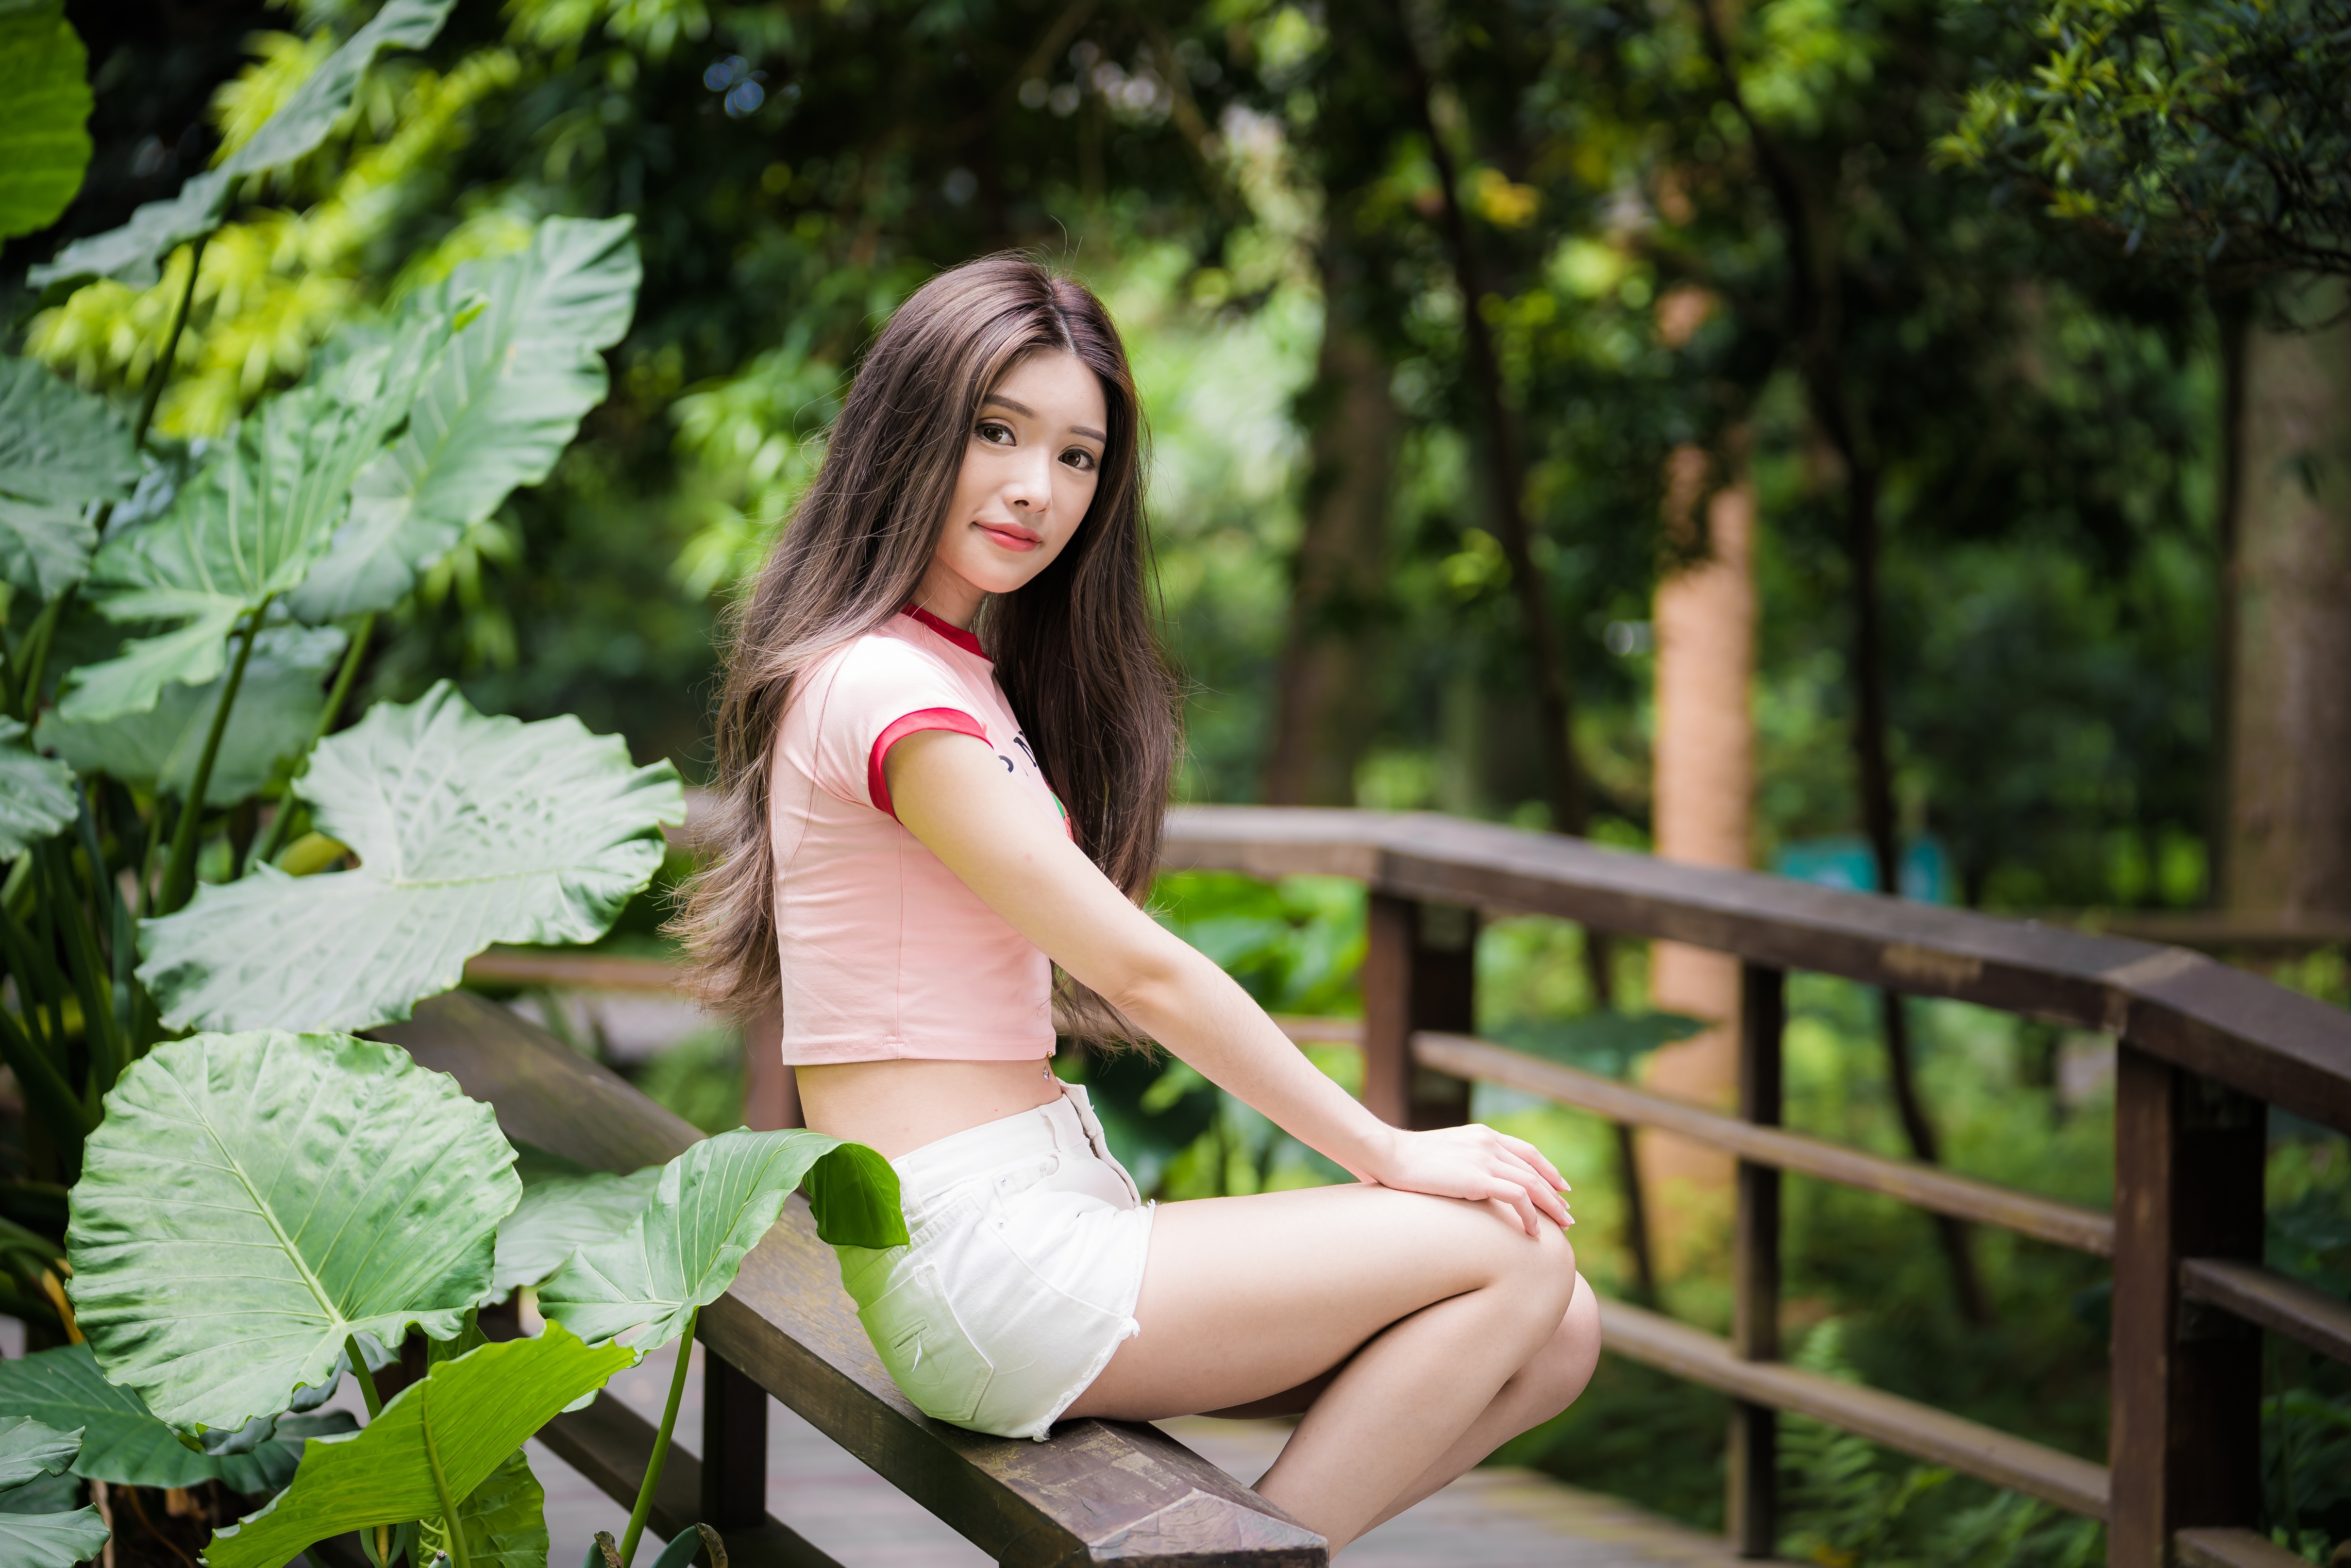 People 4562x3043 Asian model women long hair brunette depth of field sitting railing trees leaves shorts pink tops looking at viewer wooden bridge